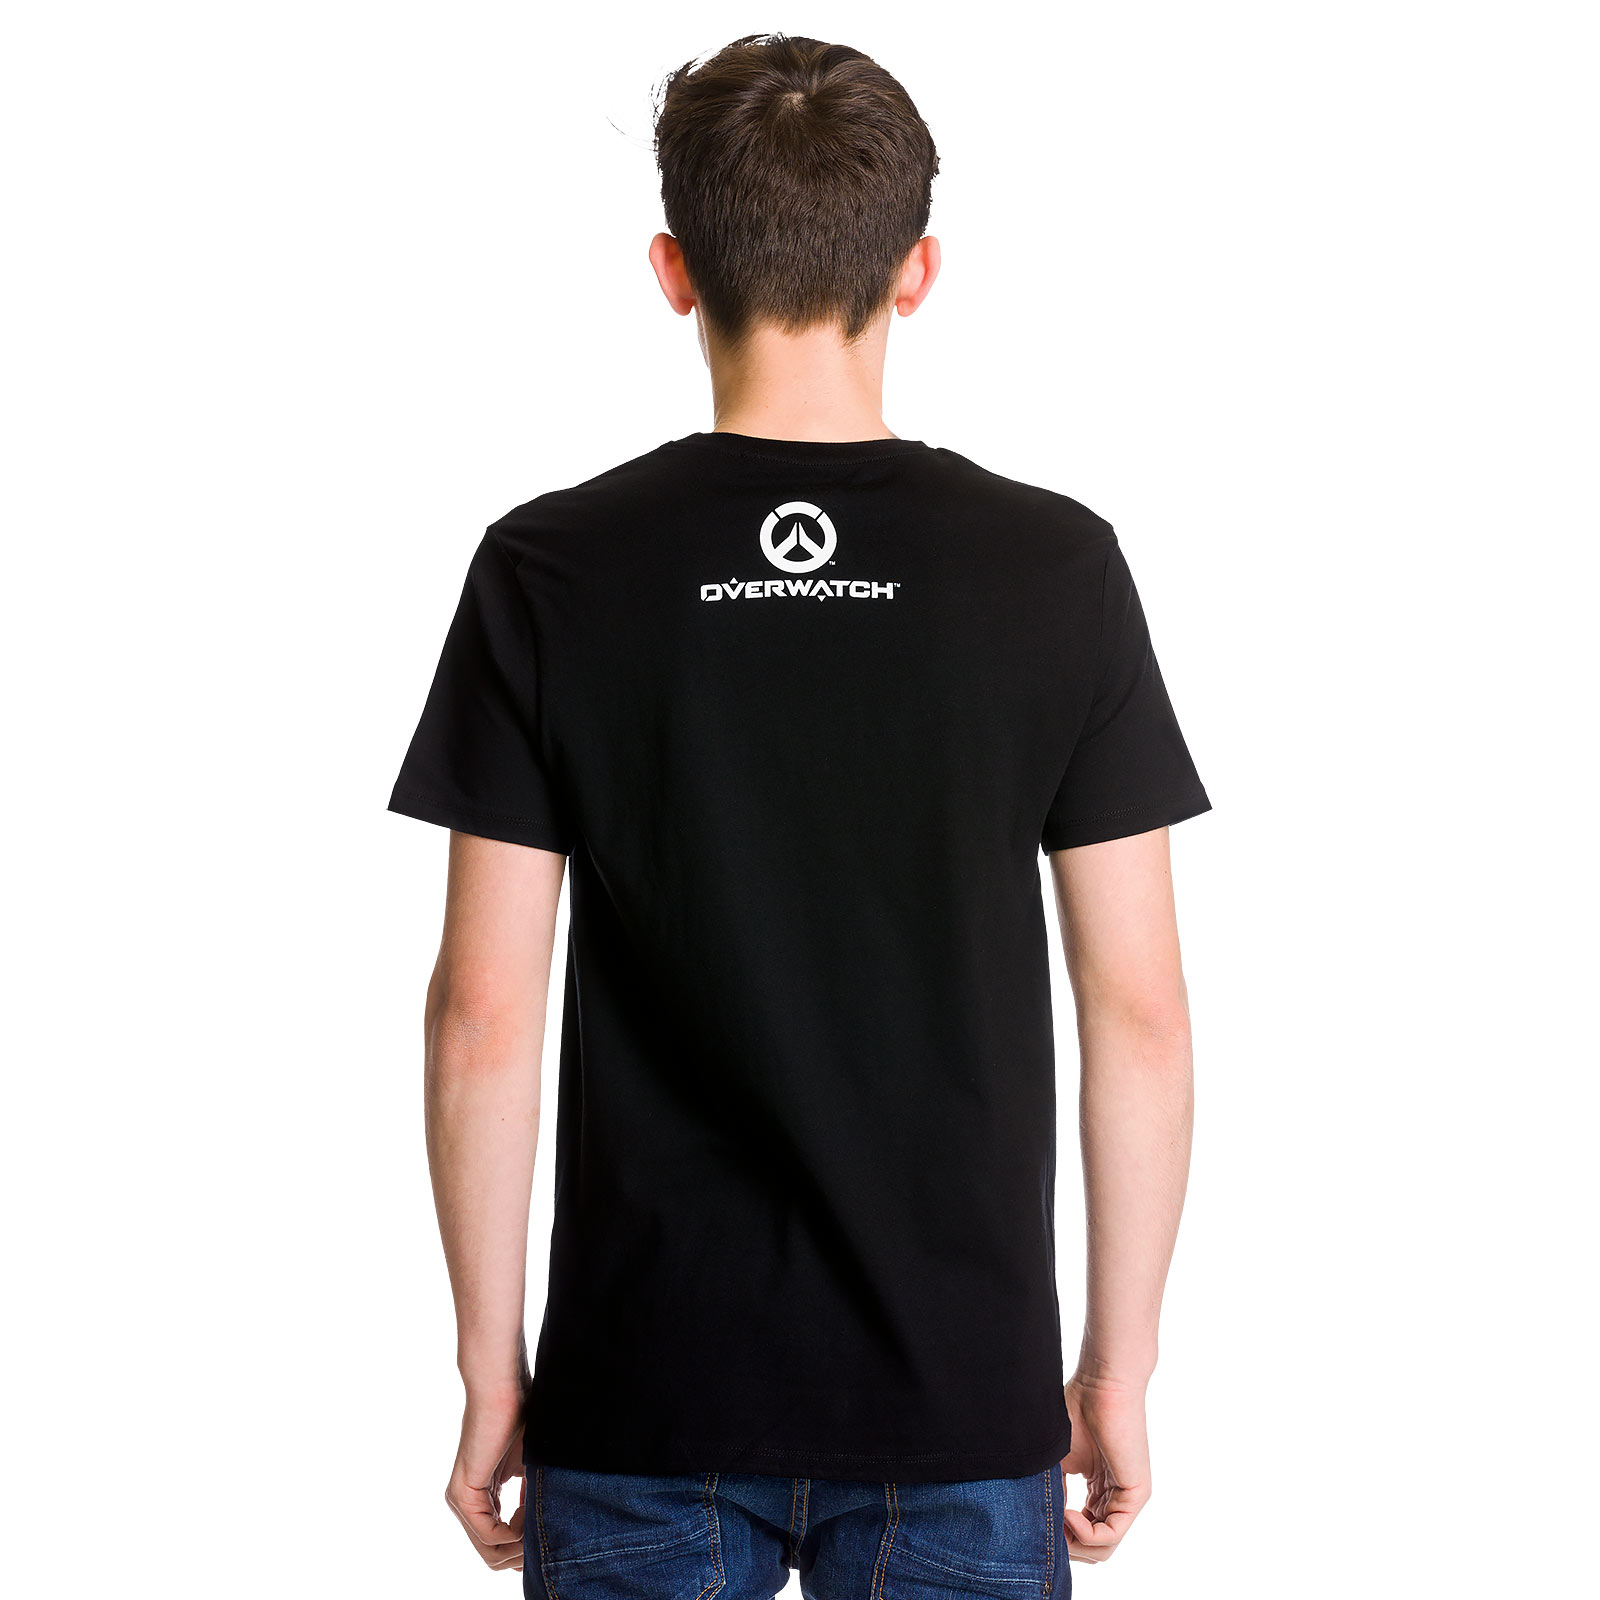 Overwatch - Reaper T-Shirt black